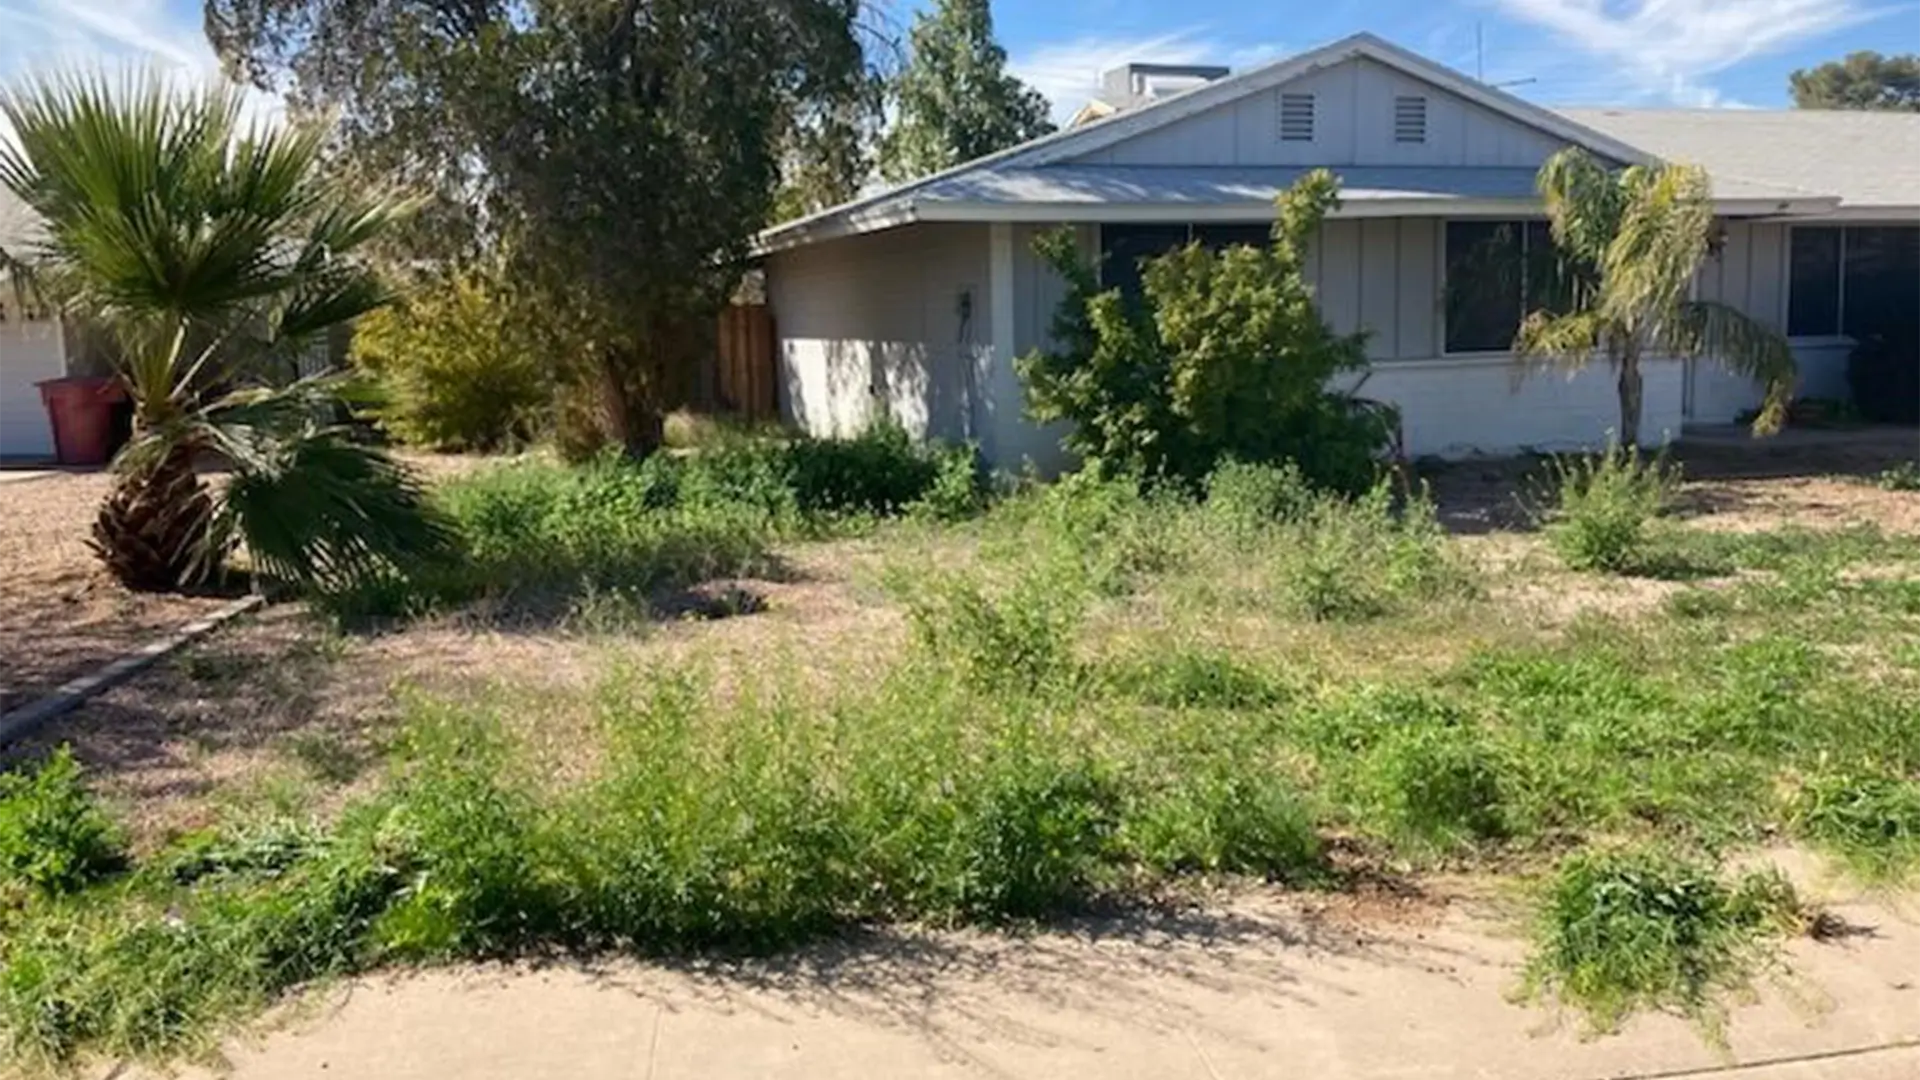 yard with overgrown weeds